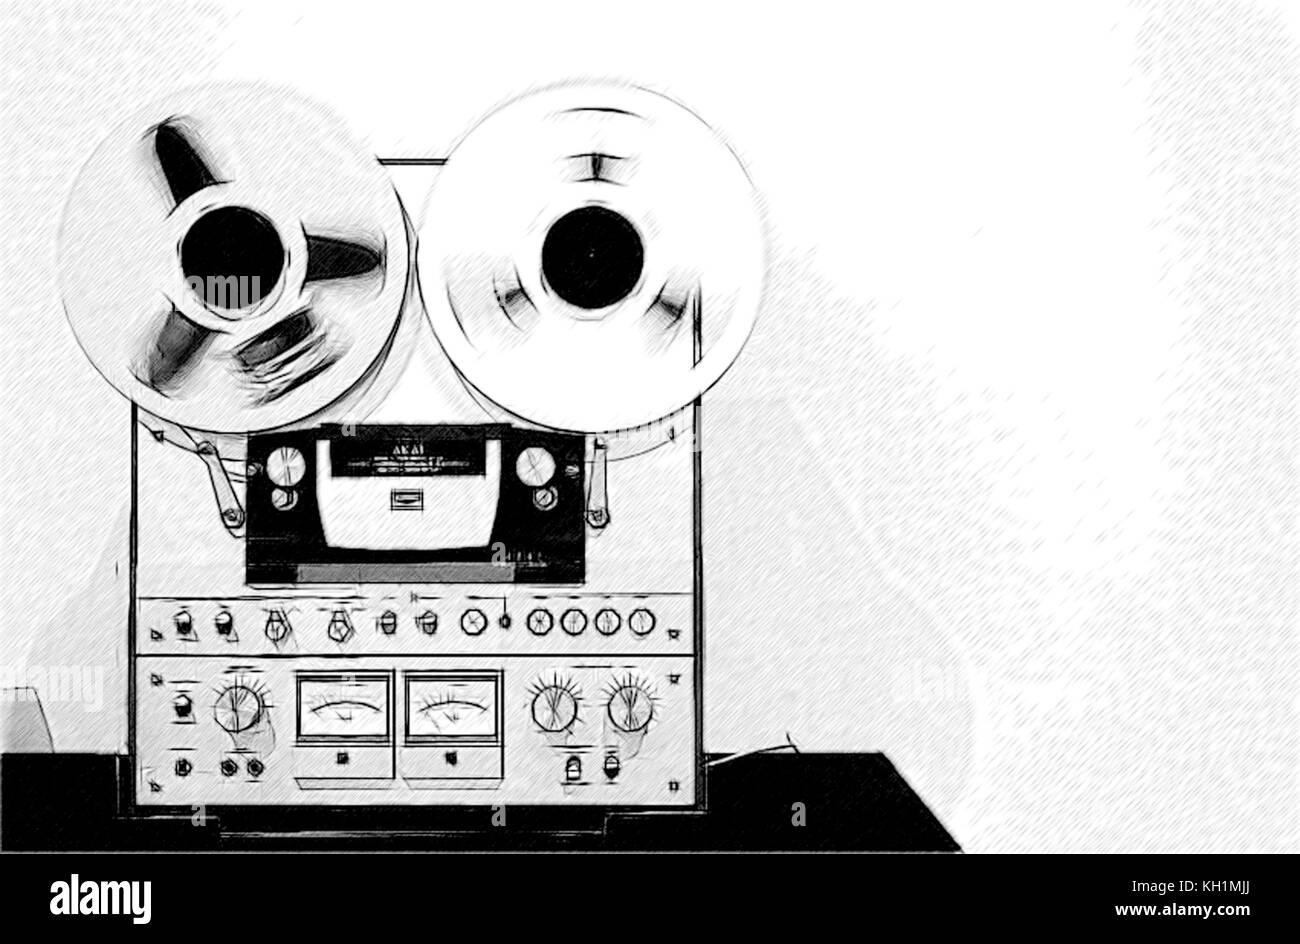 Old Reel Tape Recorder Vintage Sound Stock Photo 1974832940